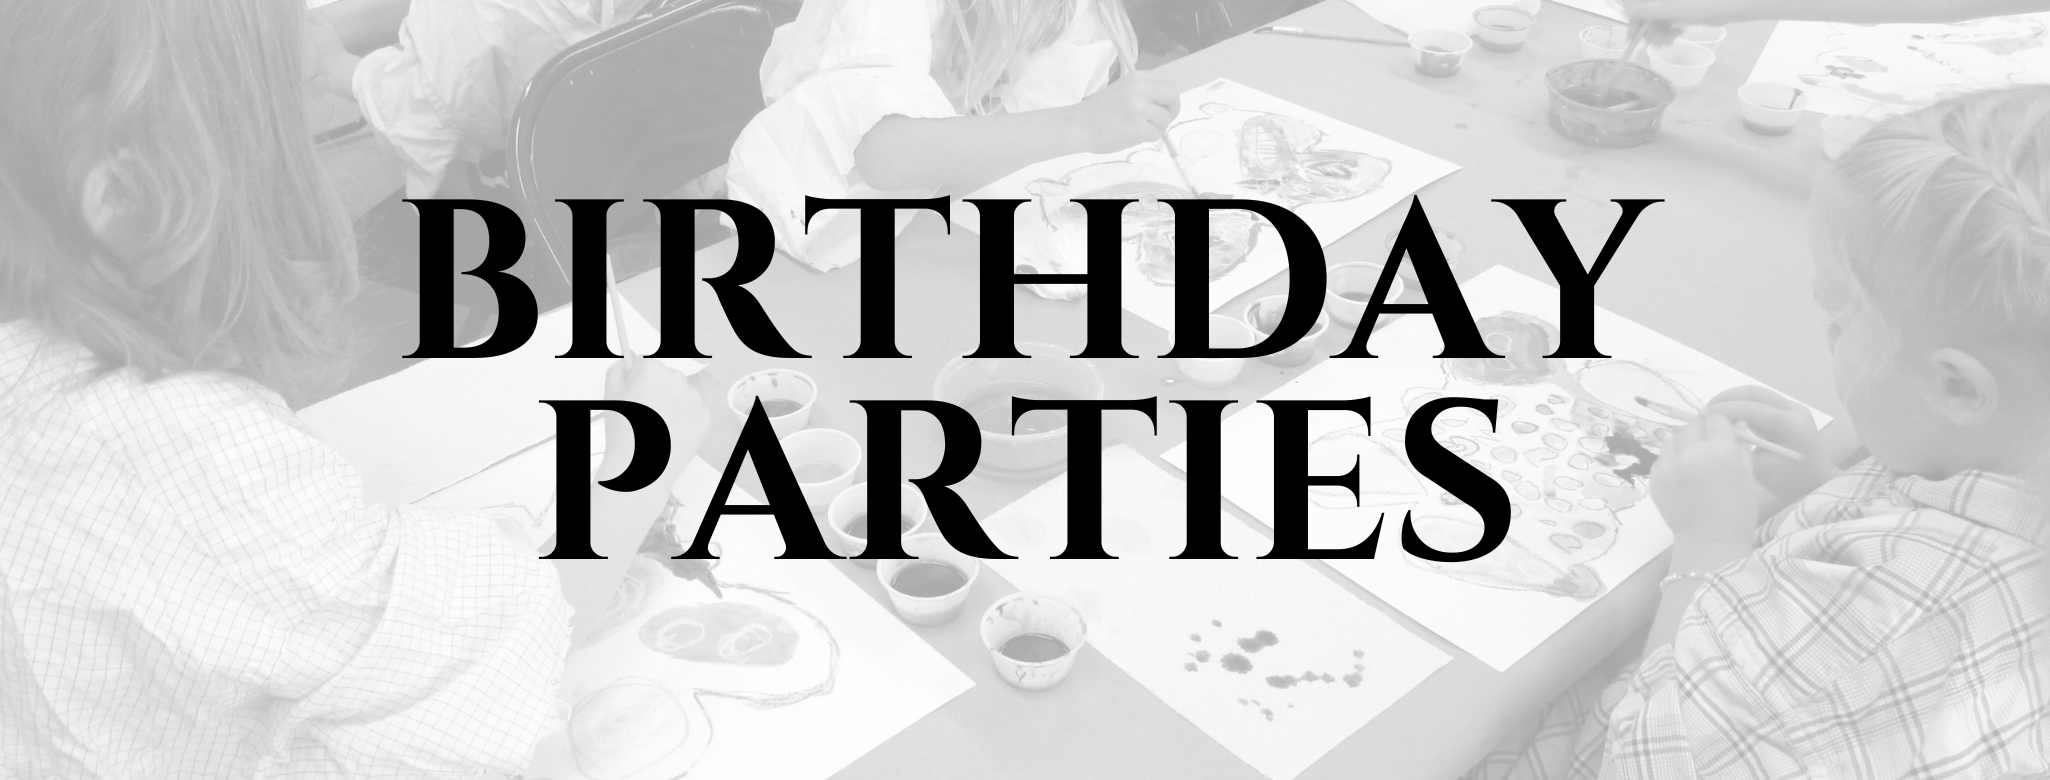 birthday parties link